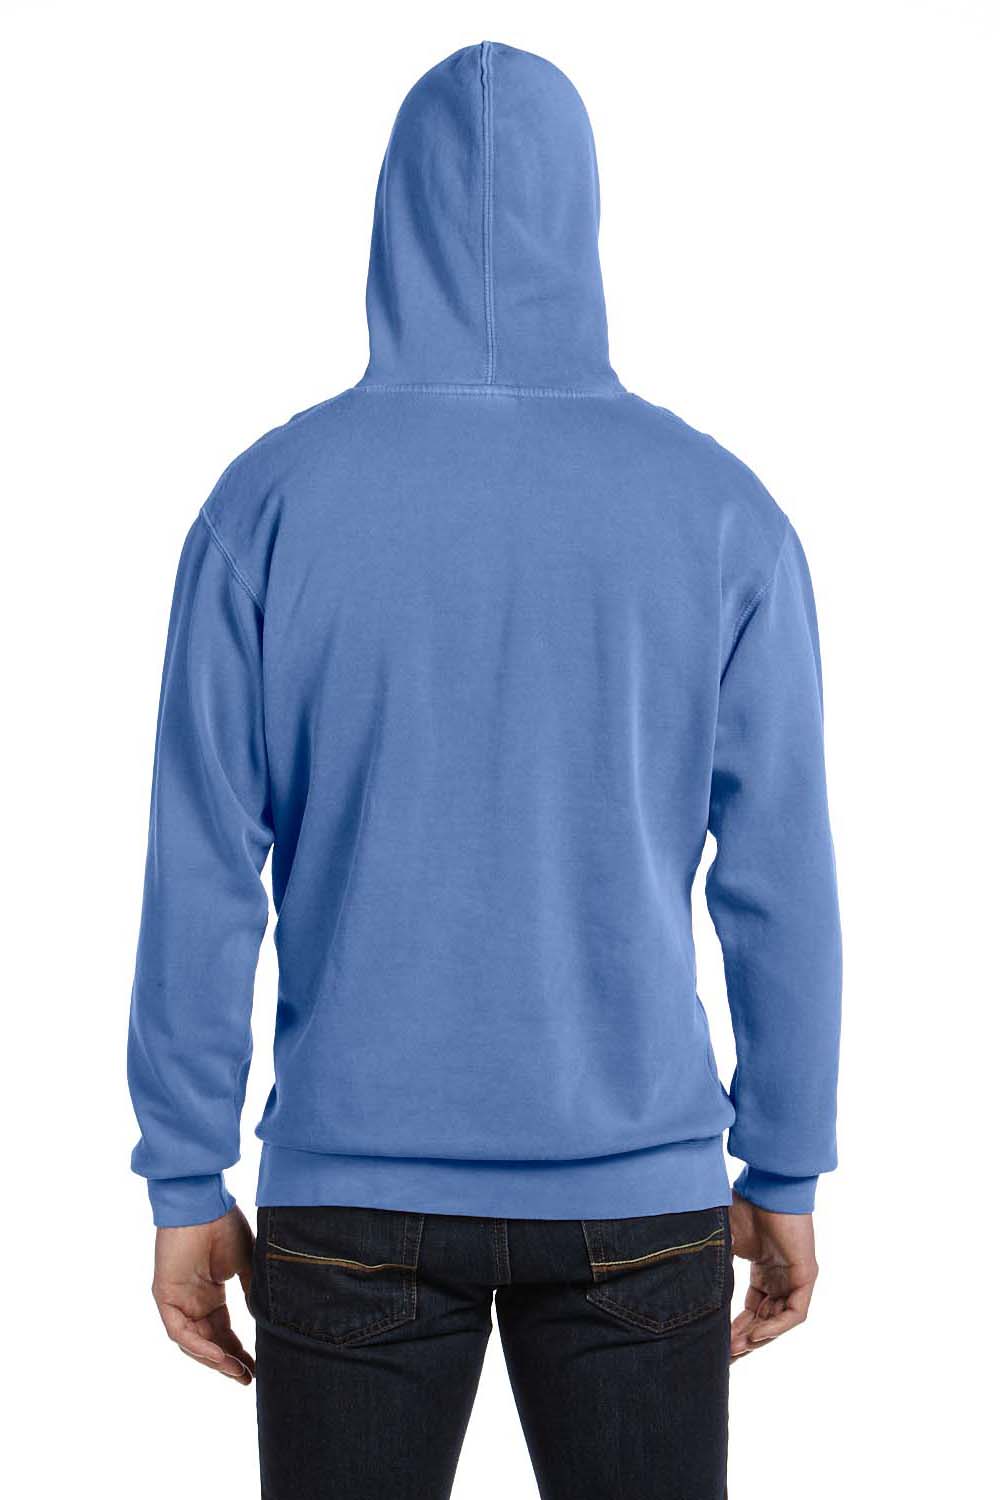 Garment-Dyed Hooded Sweatshirt - Comfort Colors 1567